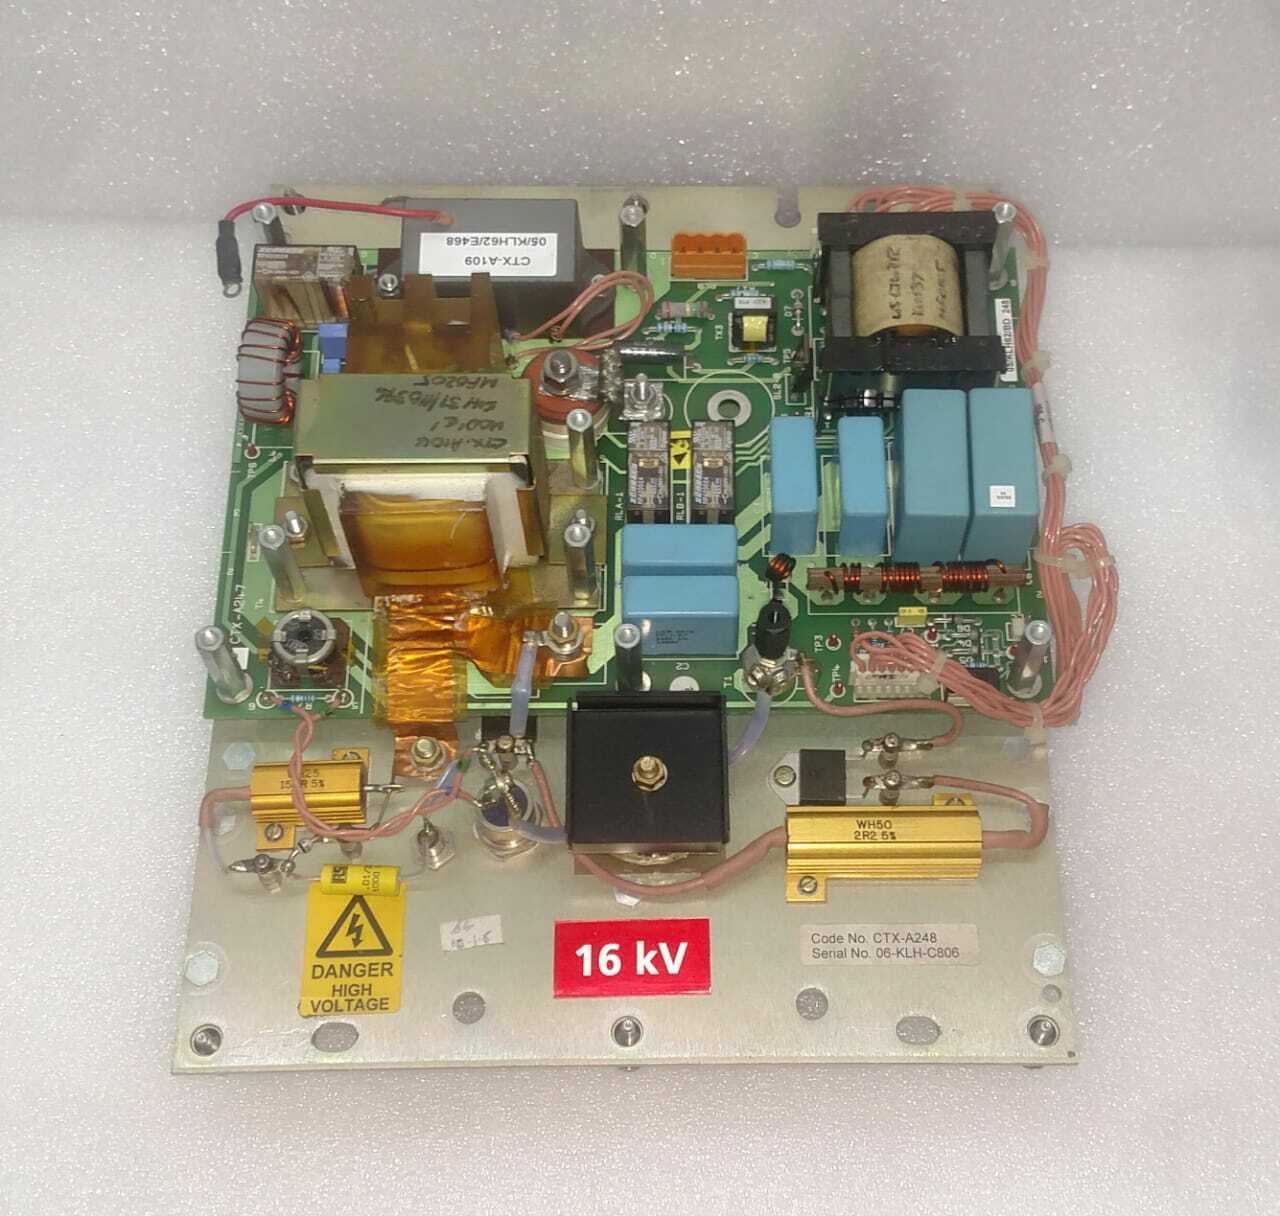 Gemini PC-4 Power Supply Control Module CTX-A248 | eBay